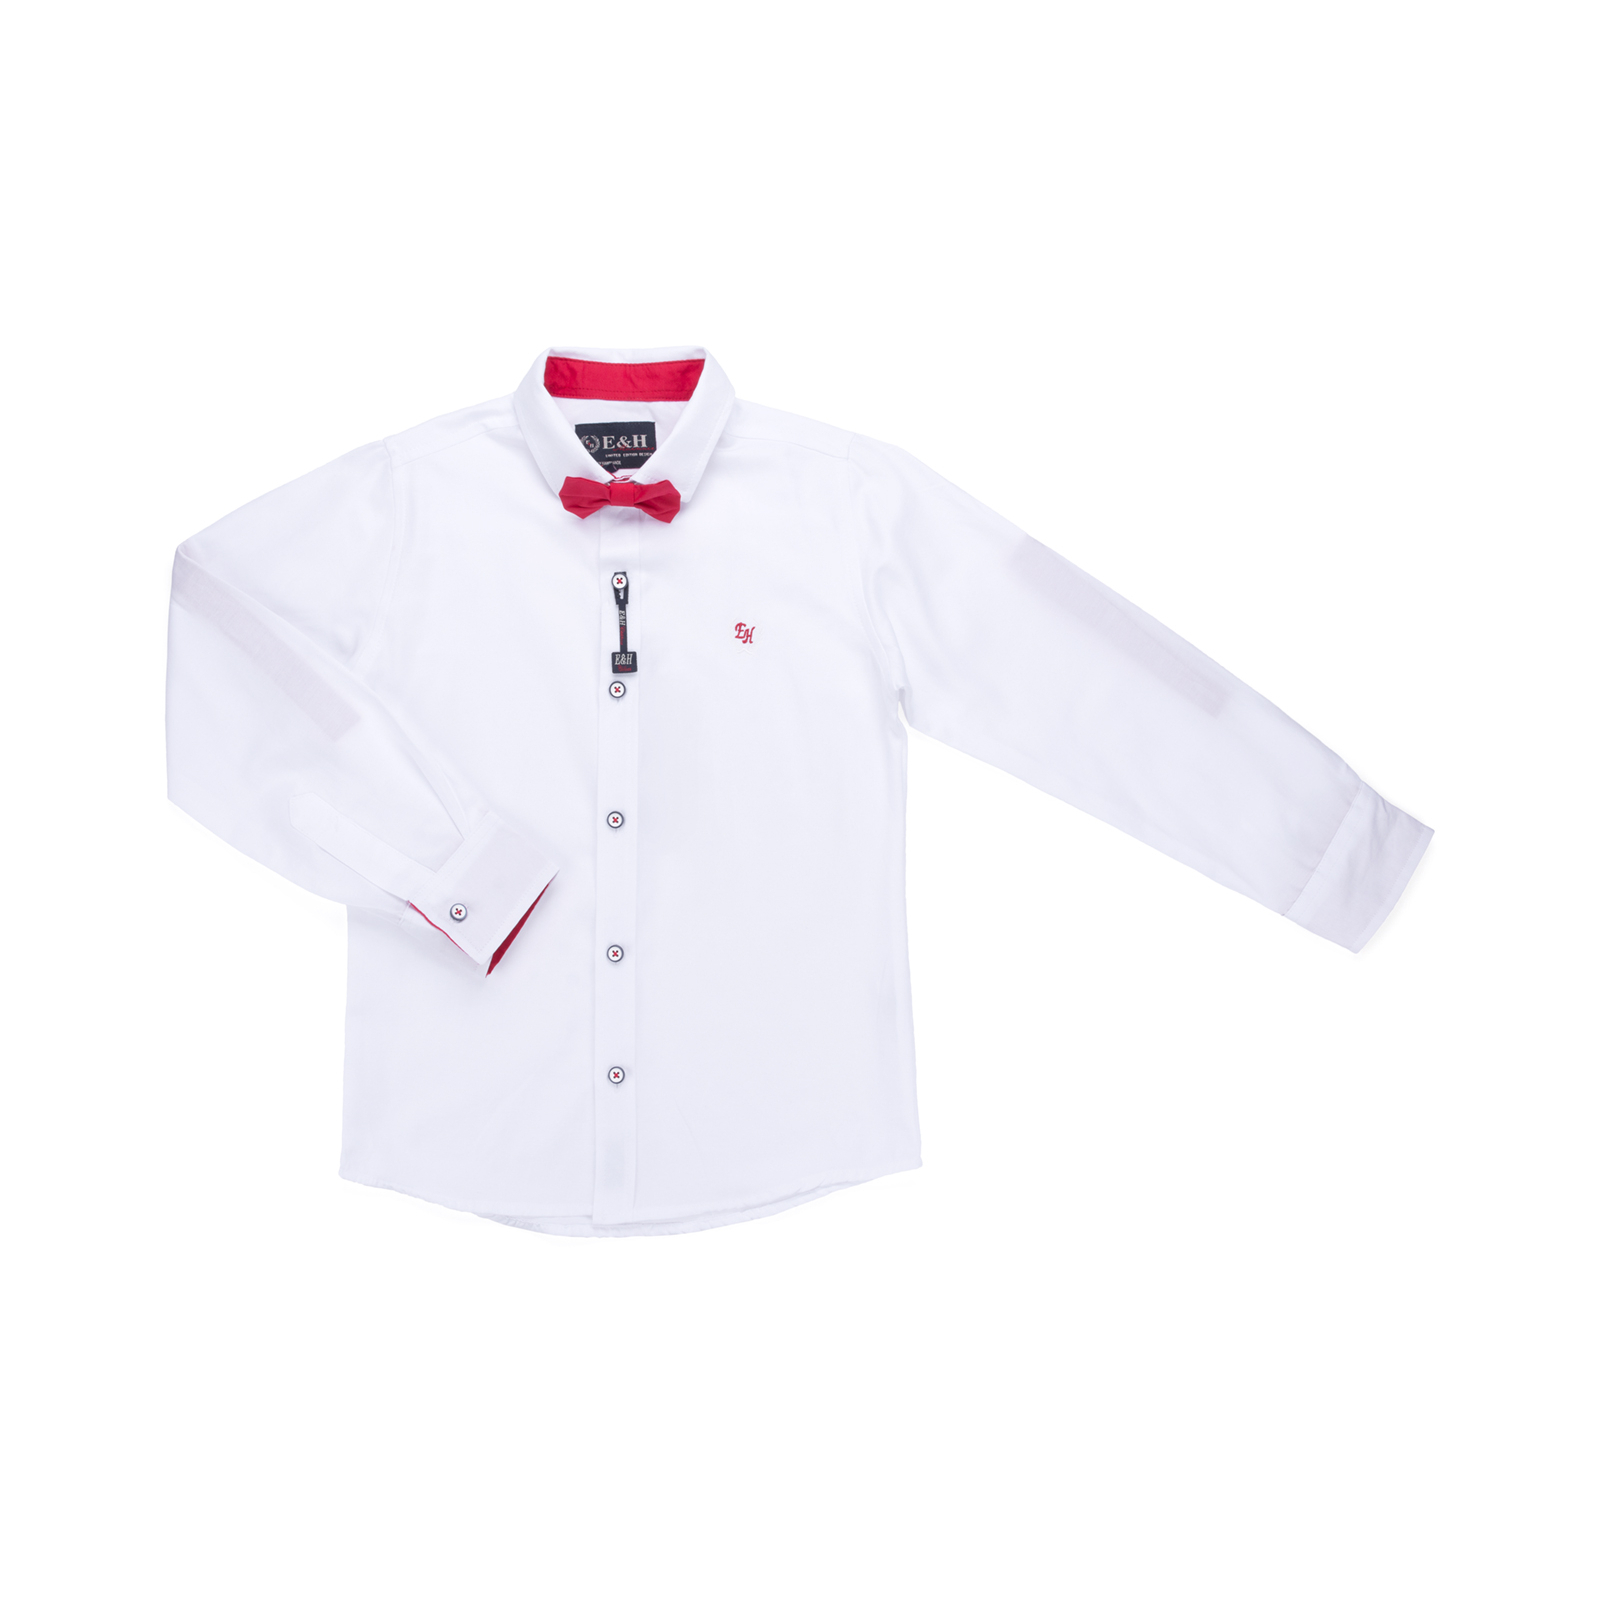 Рубашка E&H с красной бабочкой (G-233-152B-white-red)